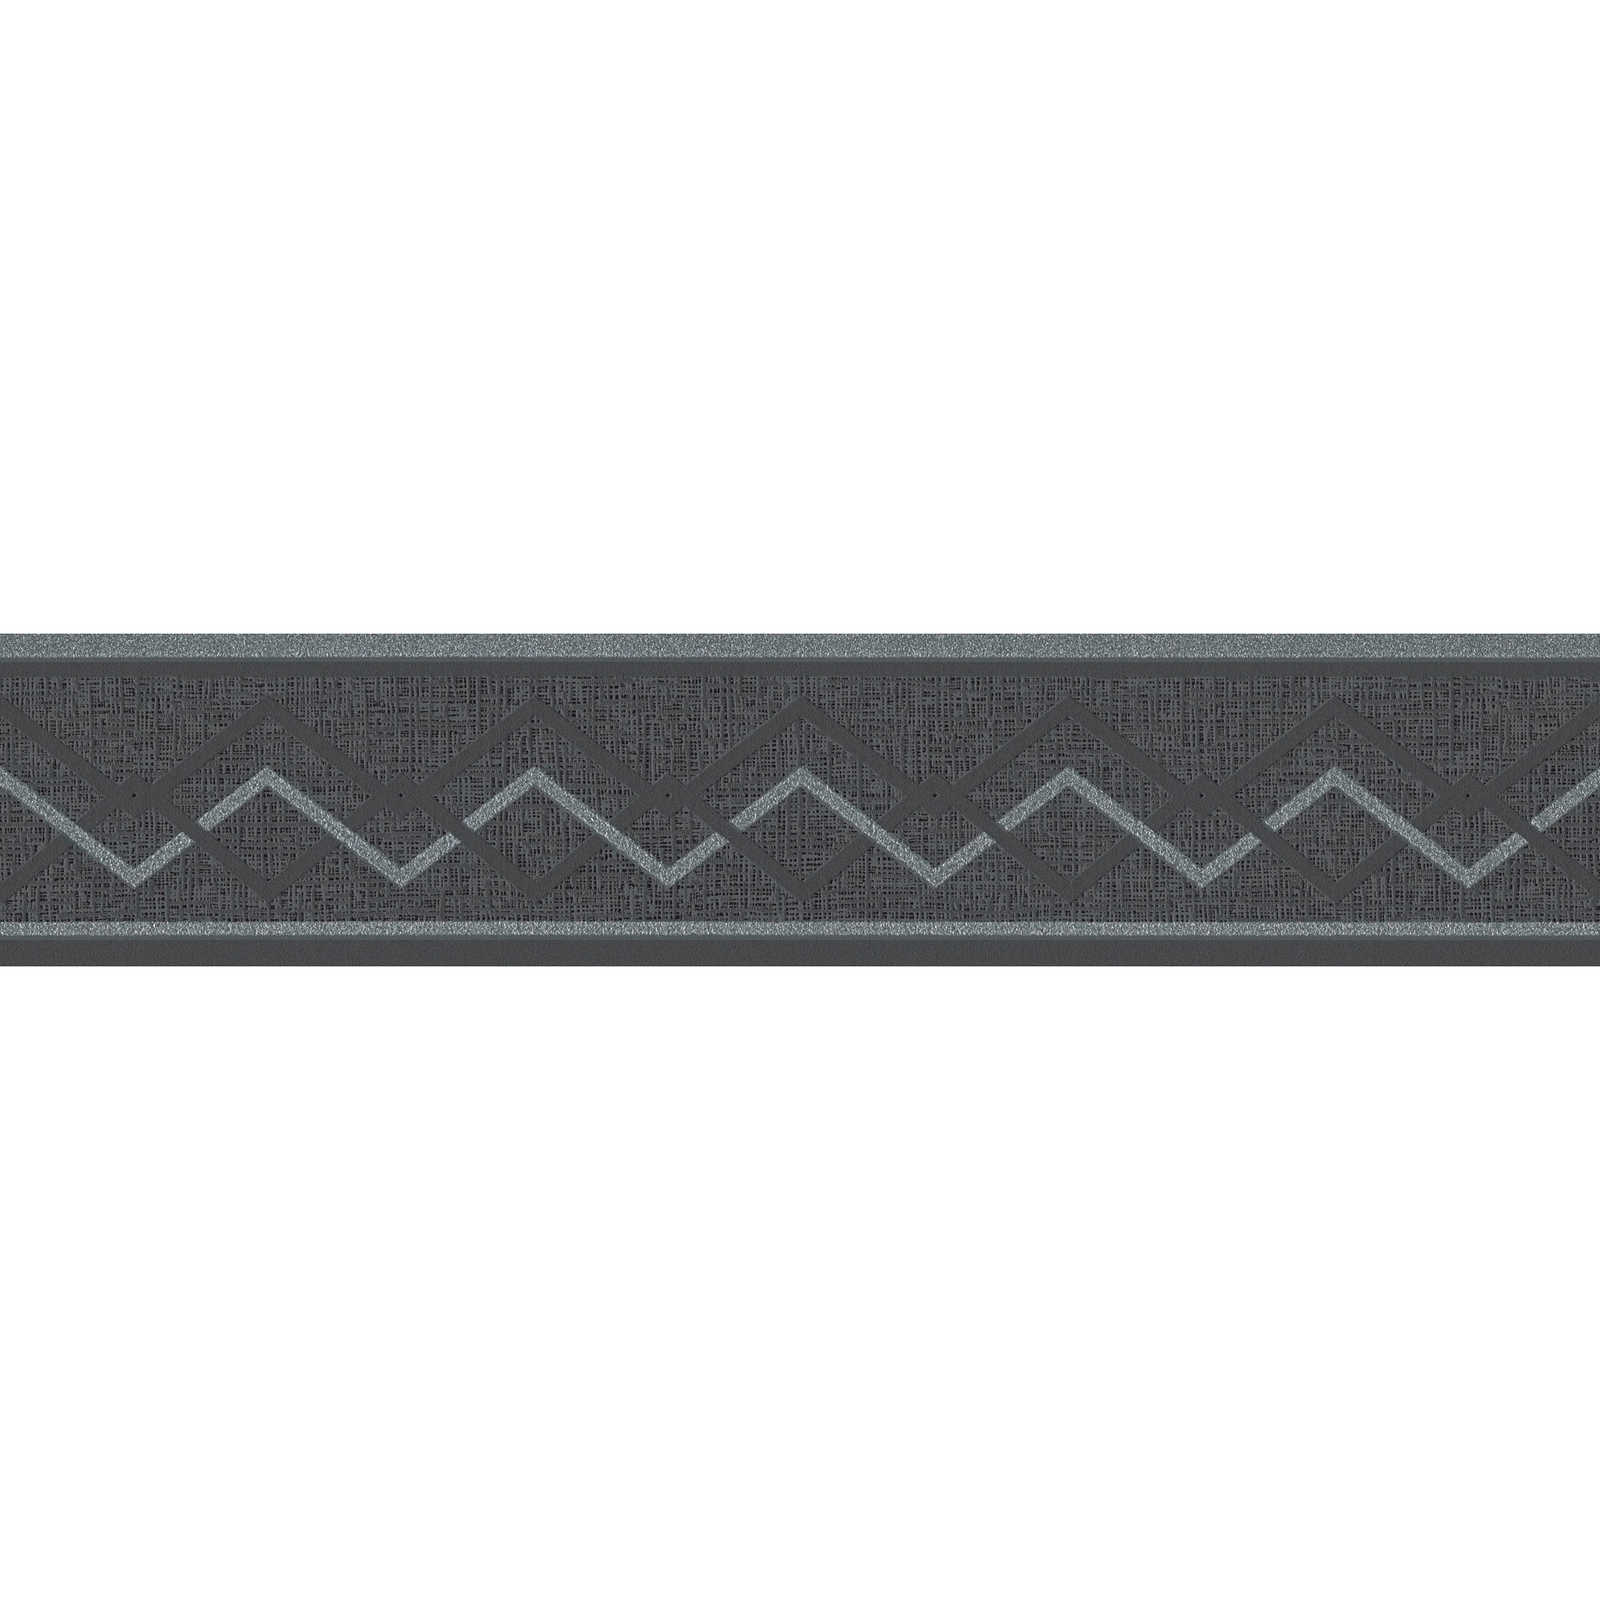         Grey and black border with zigzag design & silver glitter
    